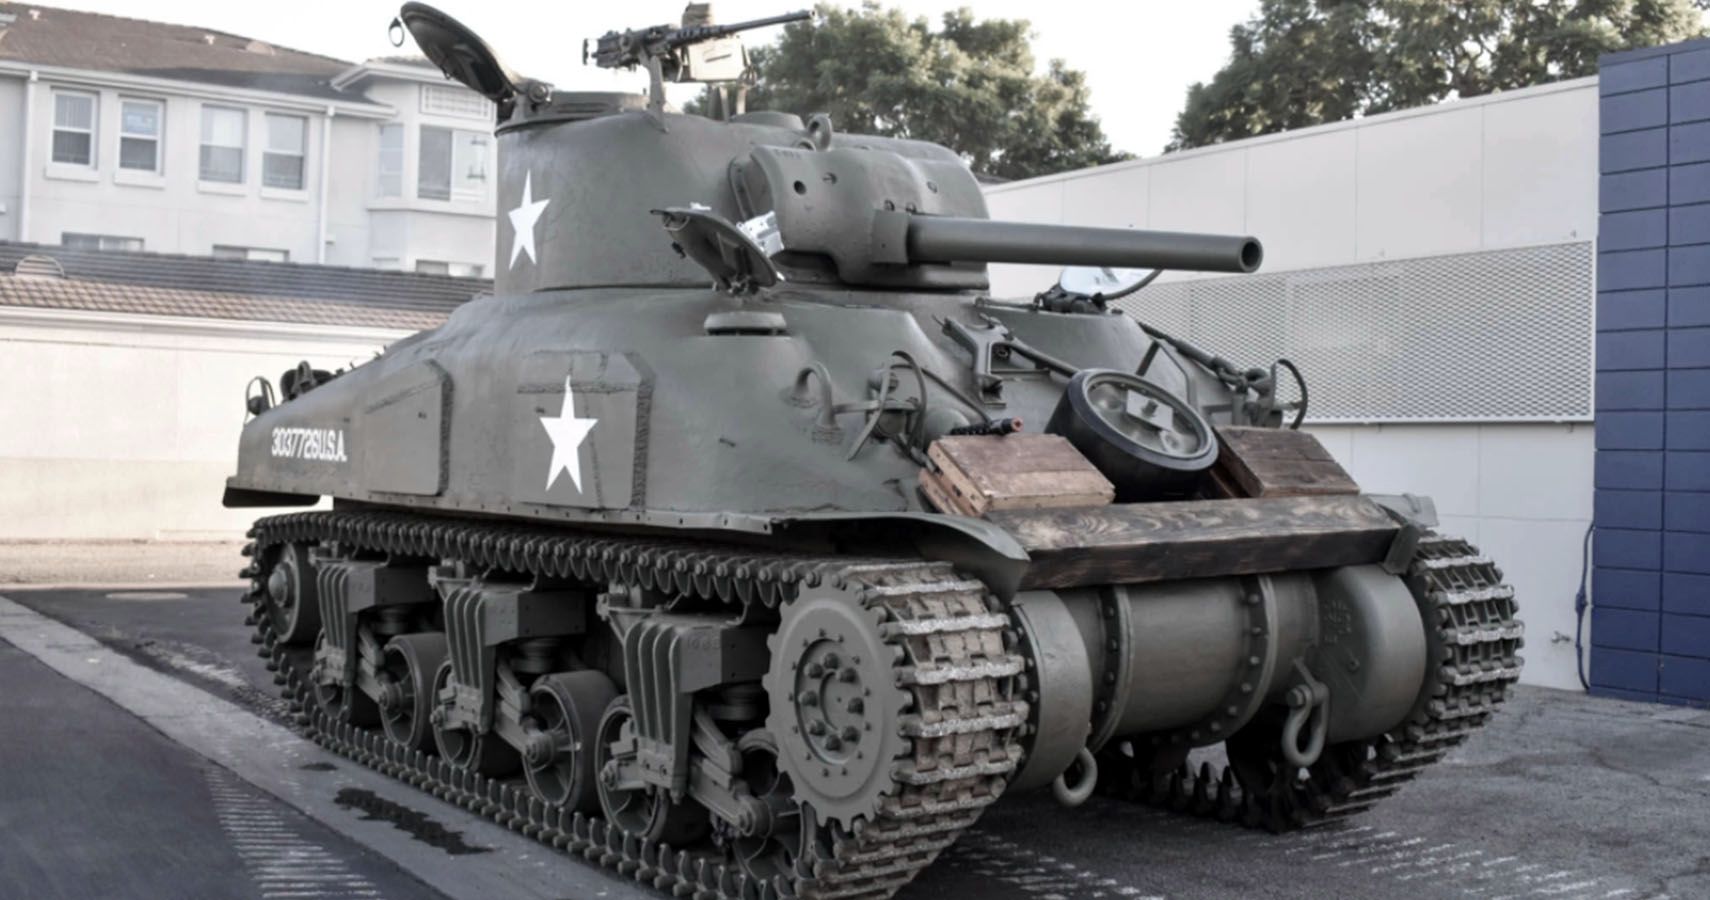 used military tanks for sale australia